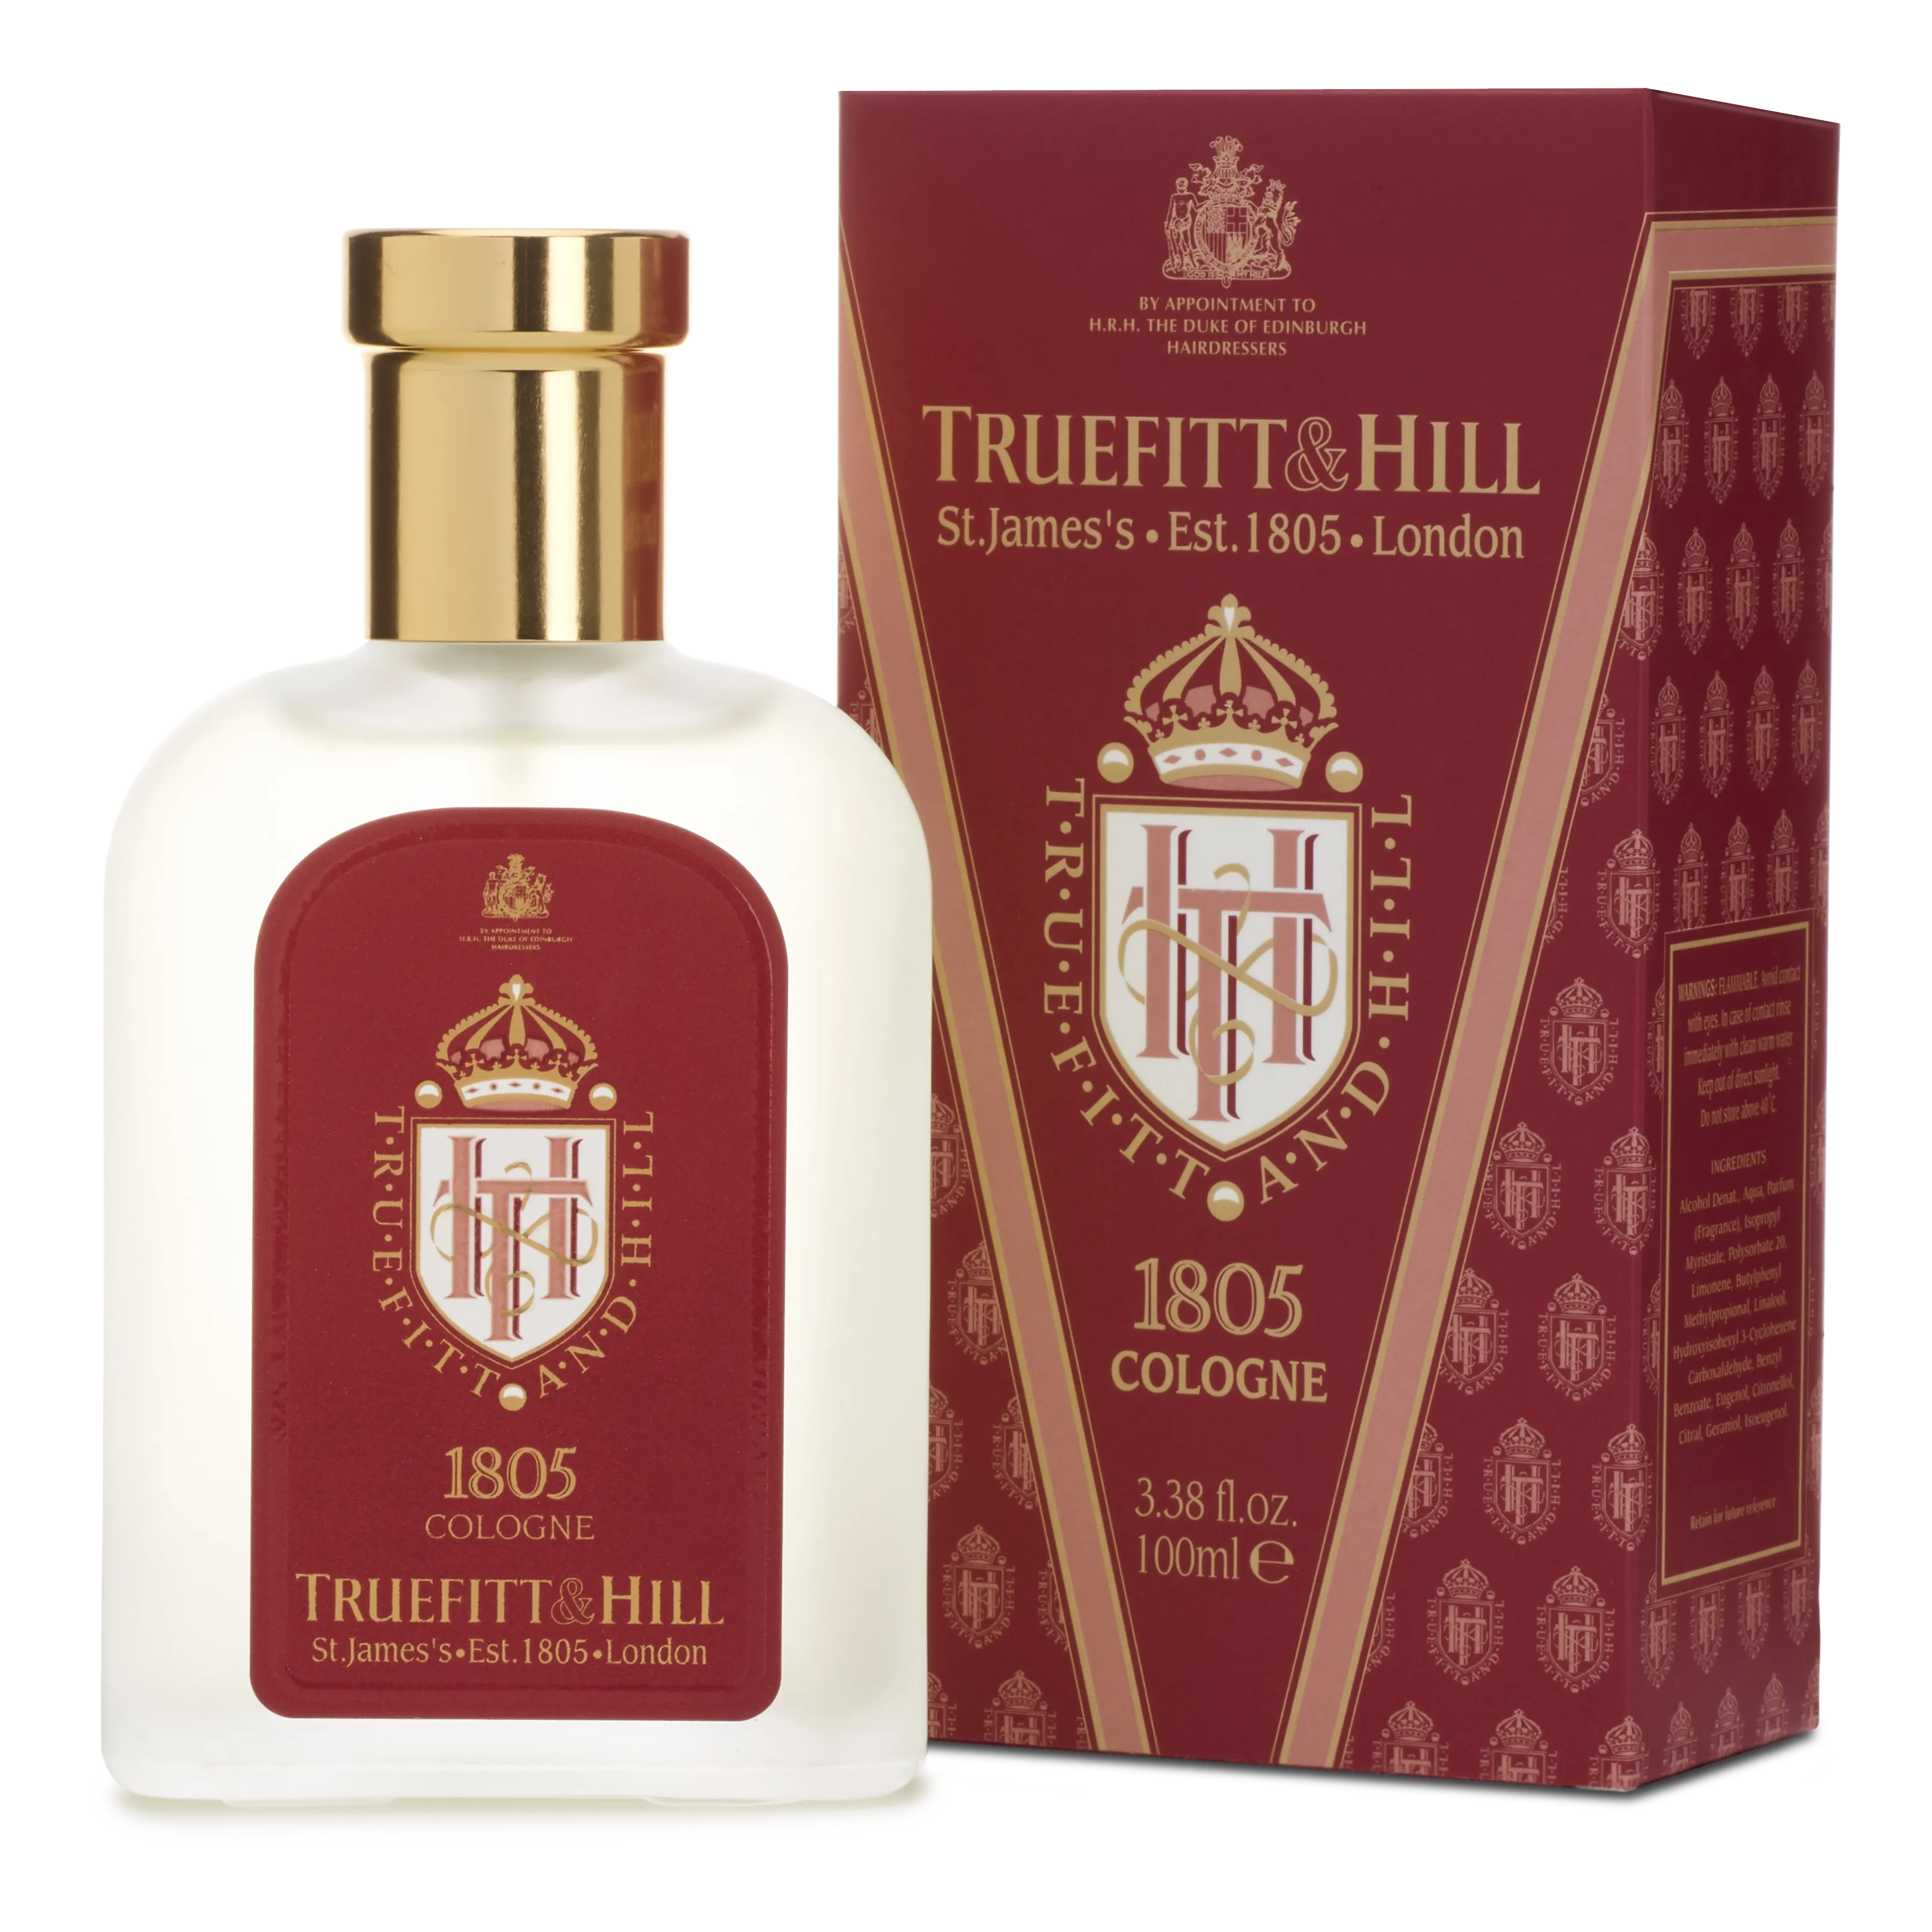 Truefitt & Hill Cologne - 1805 